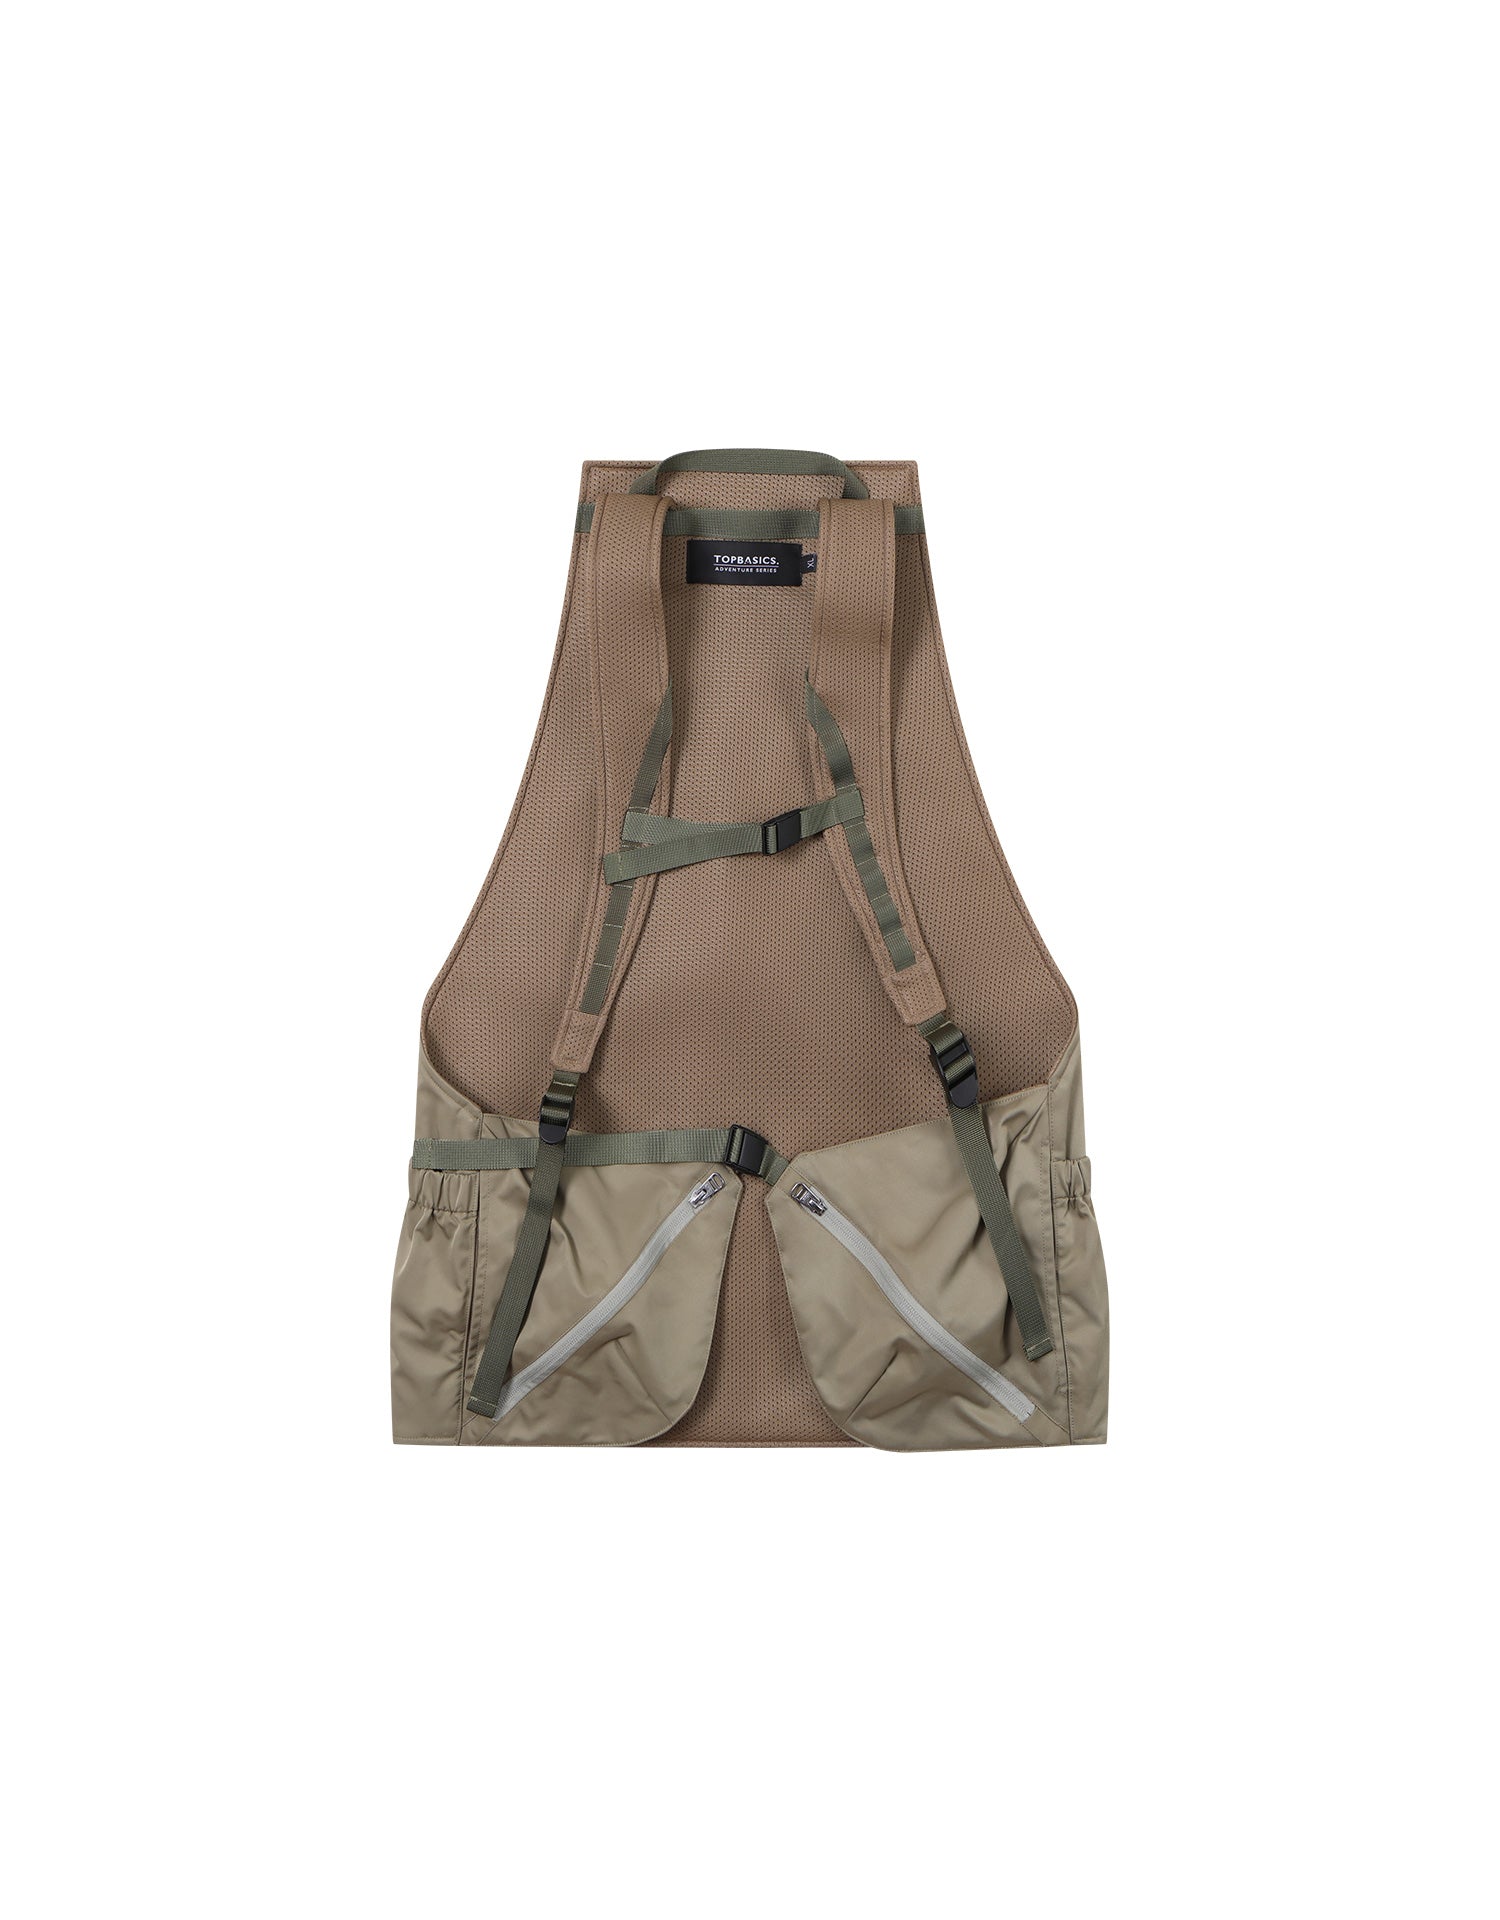 TopBasics Adventure Series Strap Pockets Vest